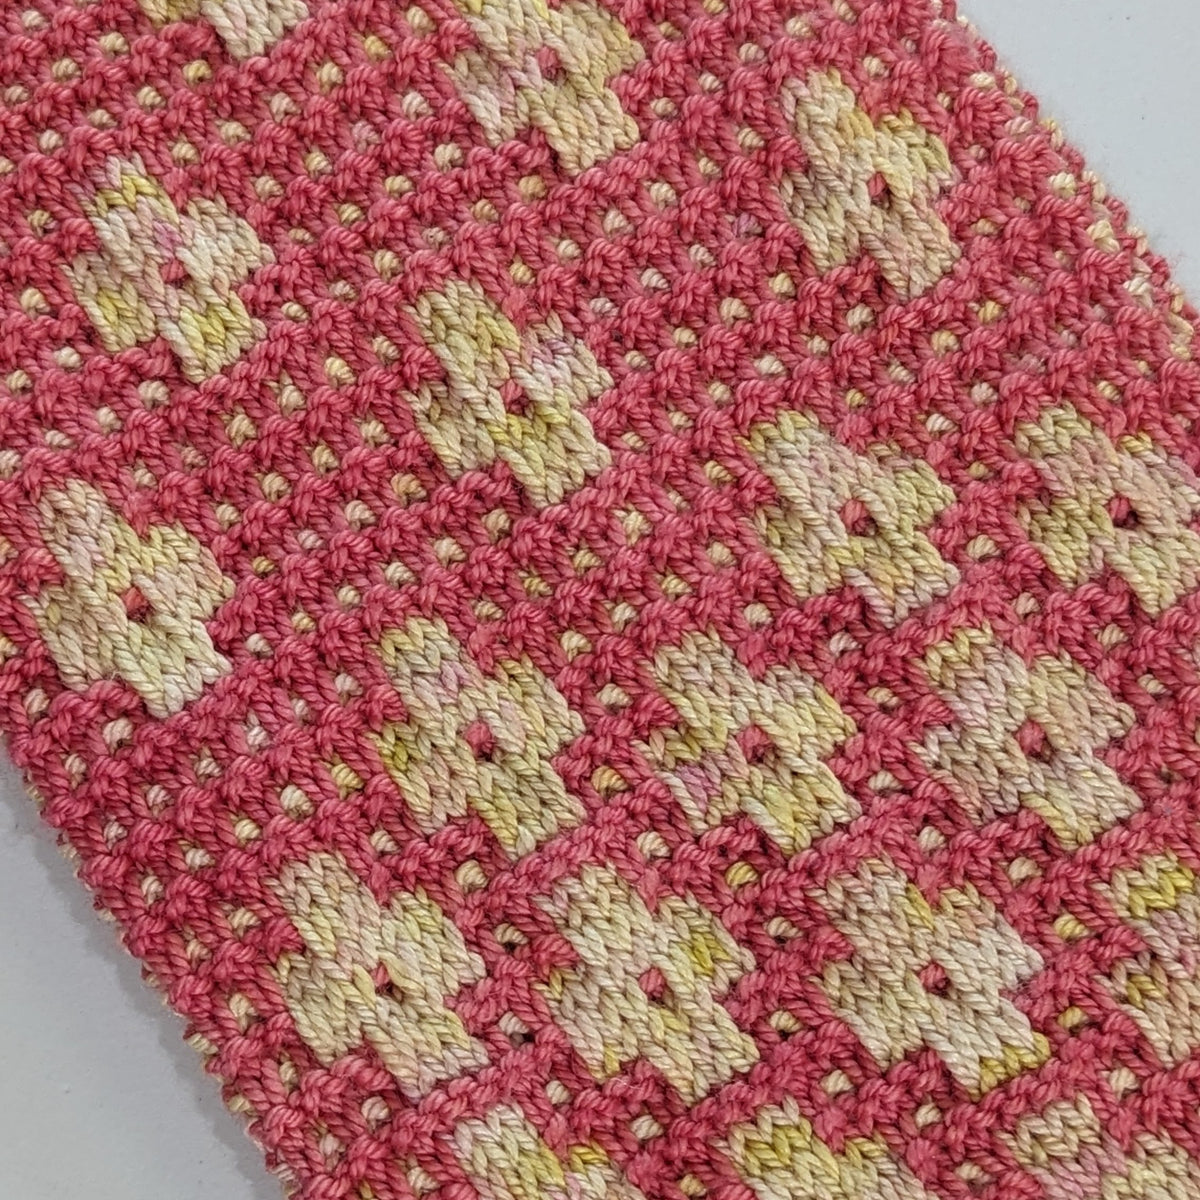 Pressed Flowers Mosaic Knitting | 2 hour workshop